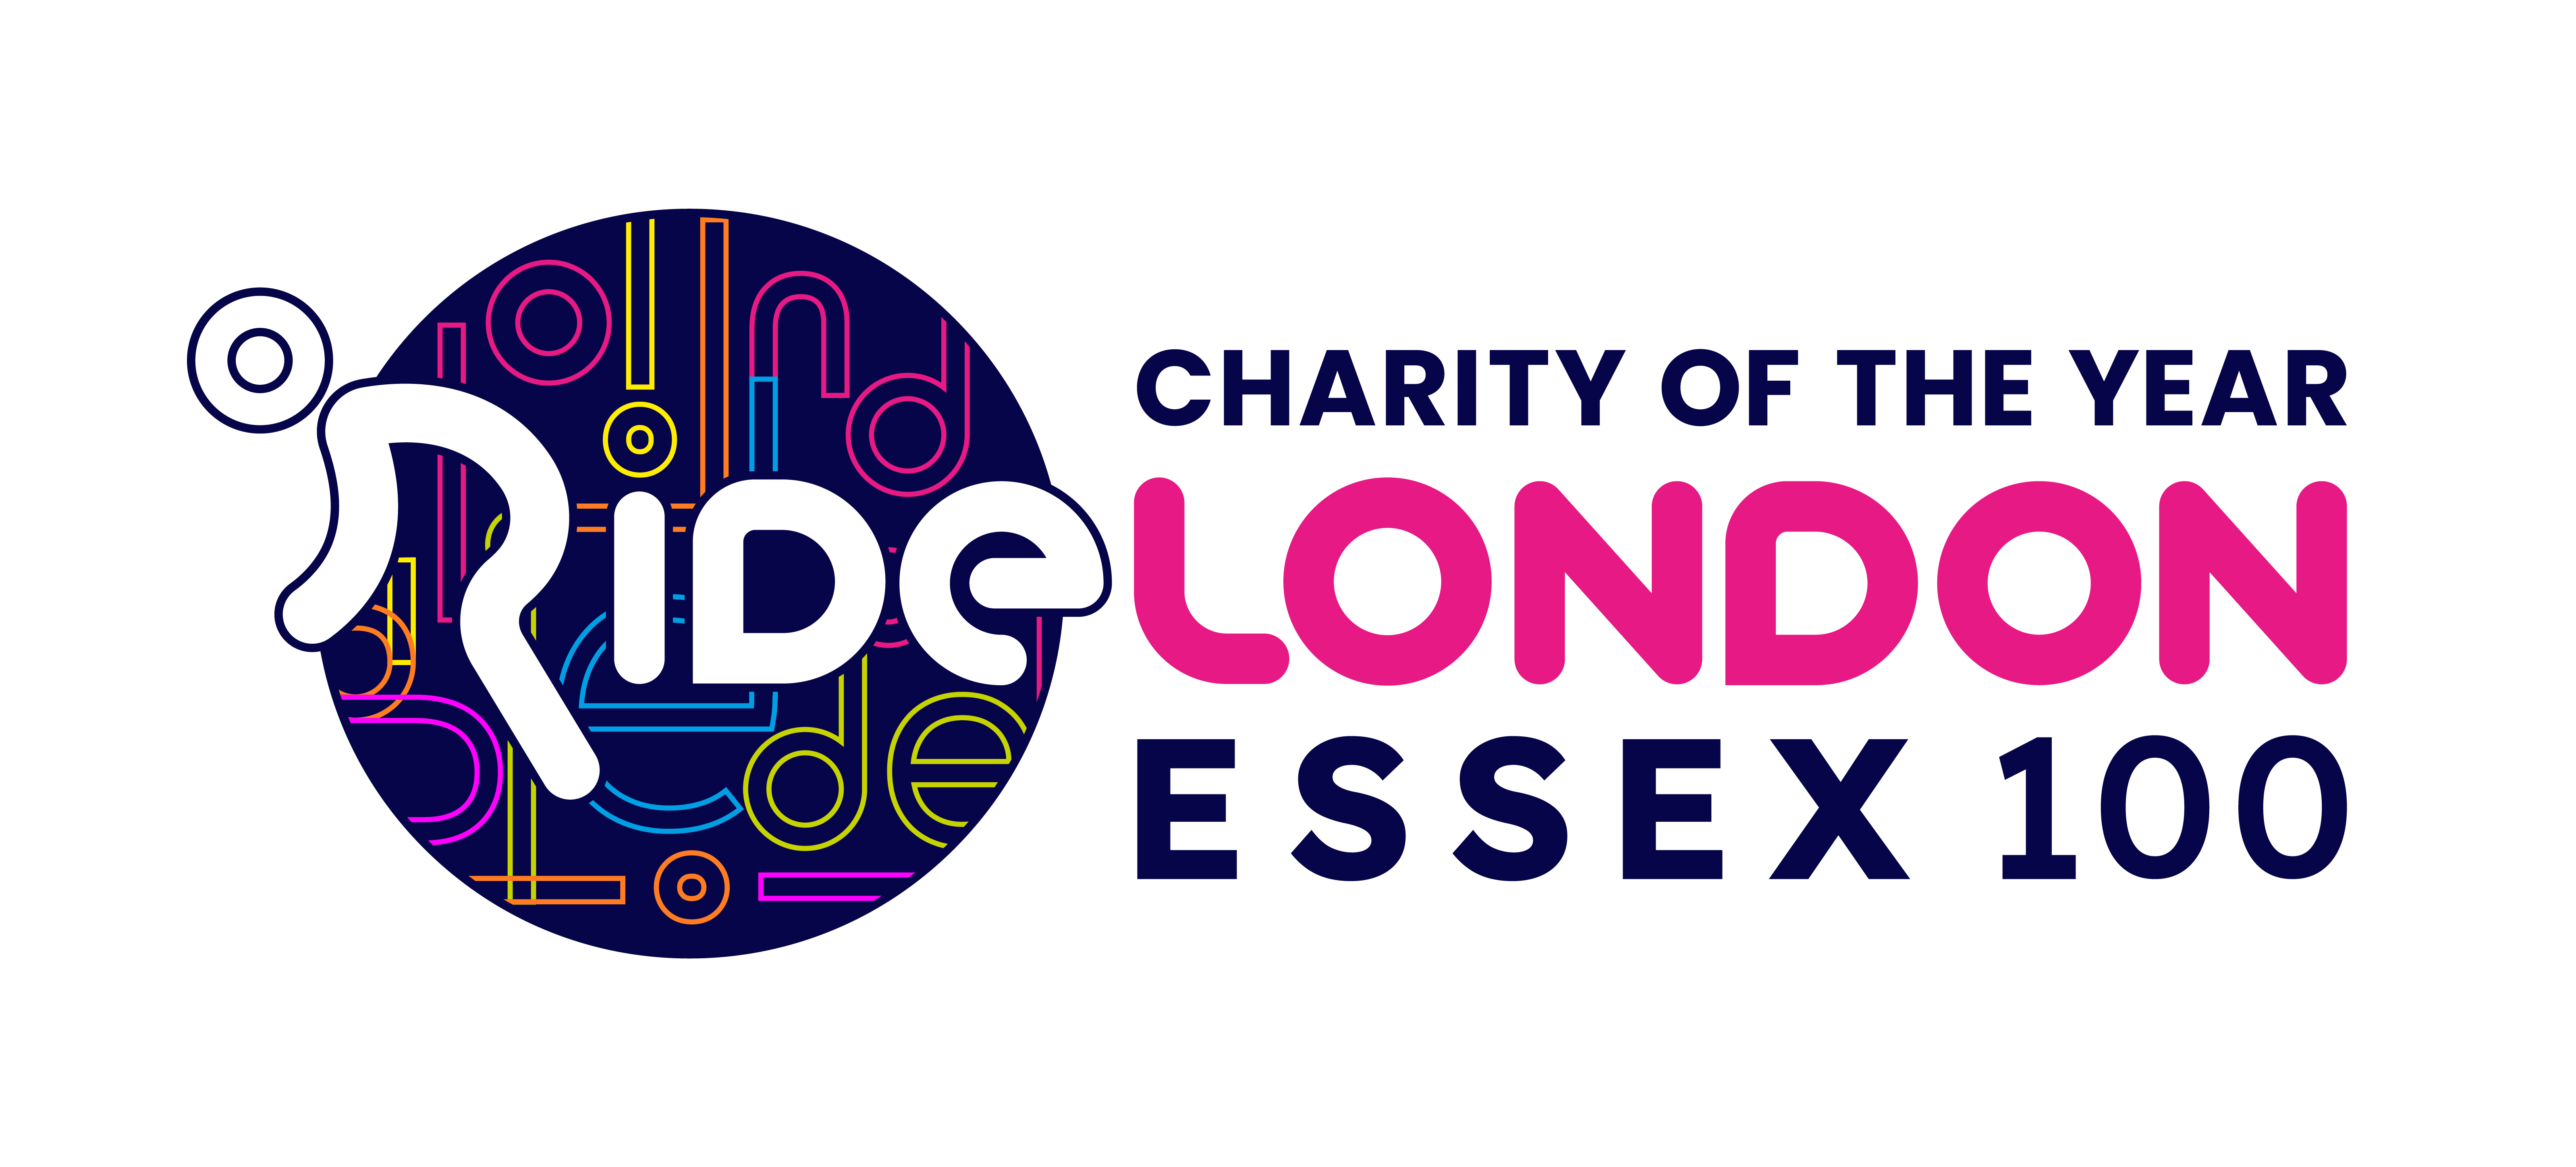 RideLondon-Essex 100 Charity of the Year logo